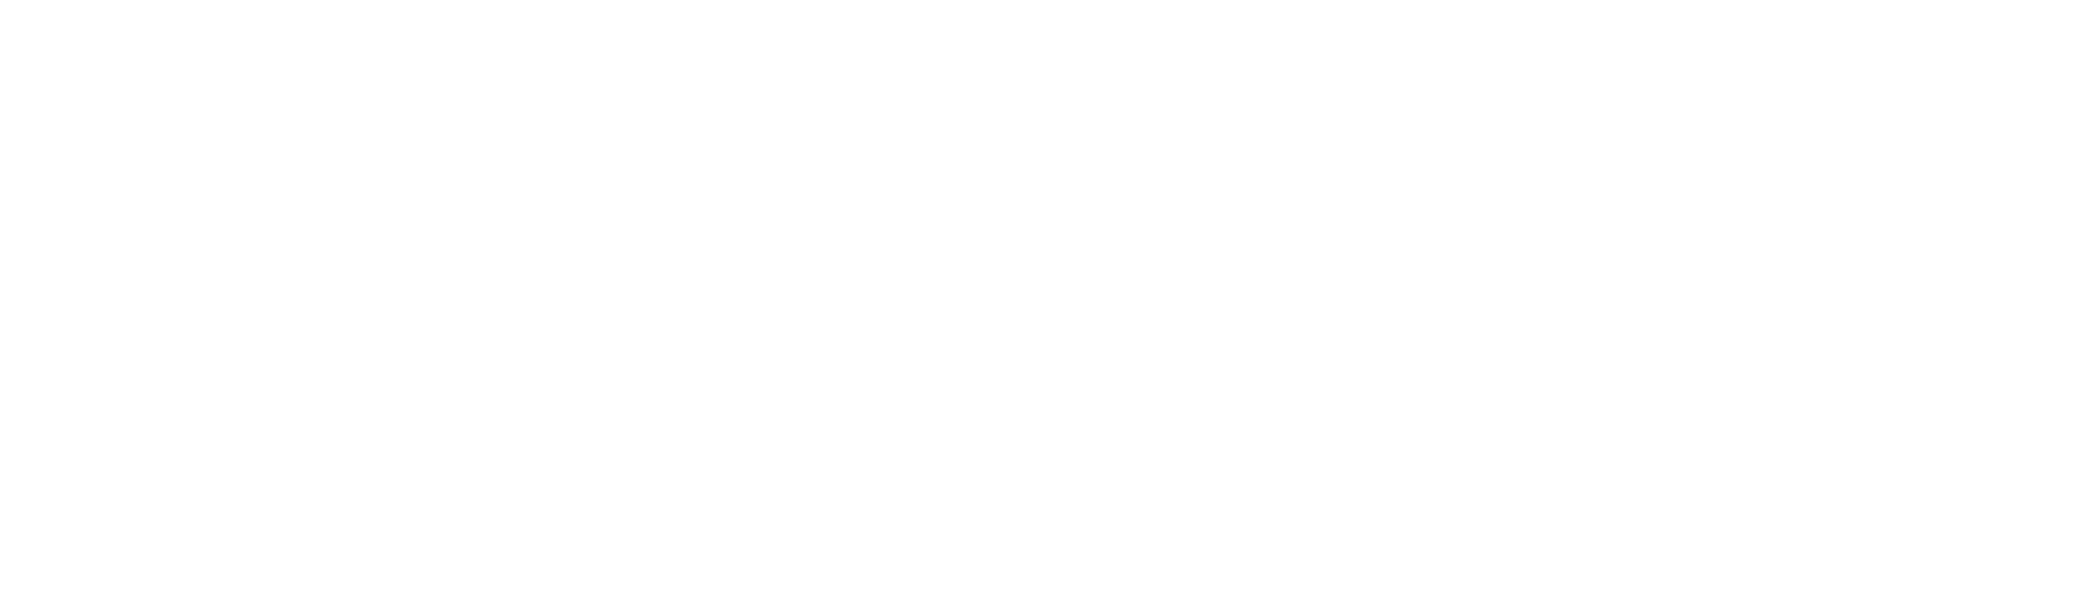 Nasdaq Logo